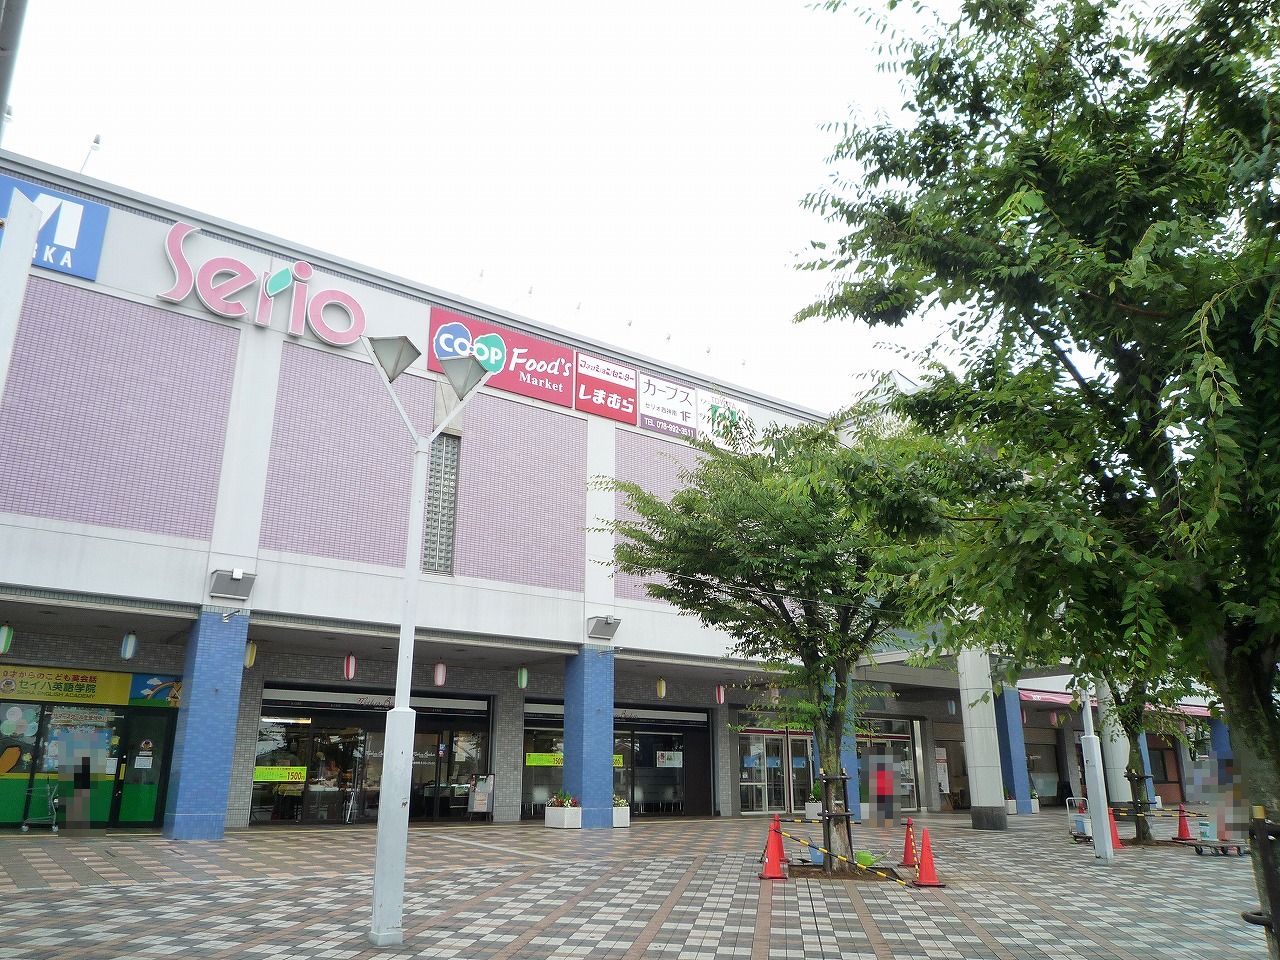 Shopping centre. Serio until the (shopping center) 770m